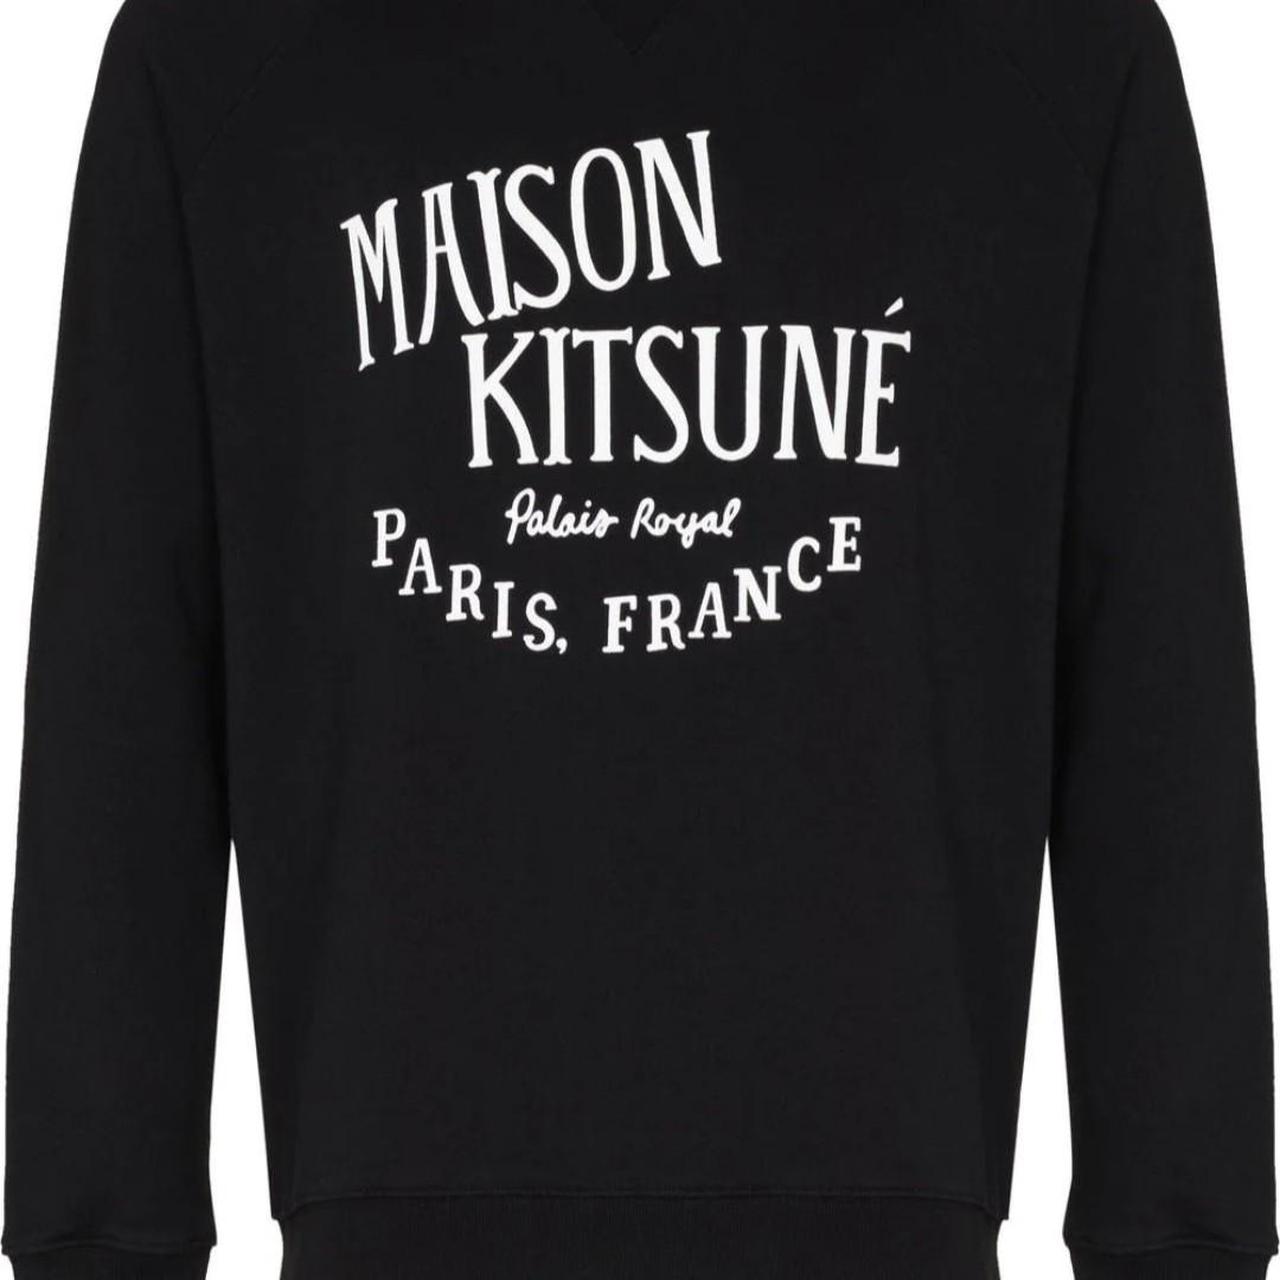 Product Image 1 - details:
💛 Maison Kitsune Sweatshirt
💛 Worn